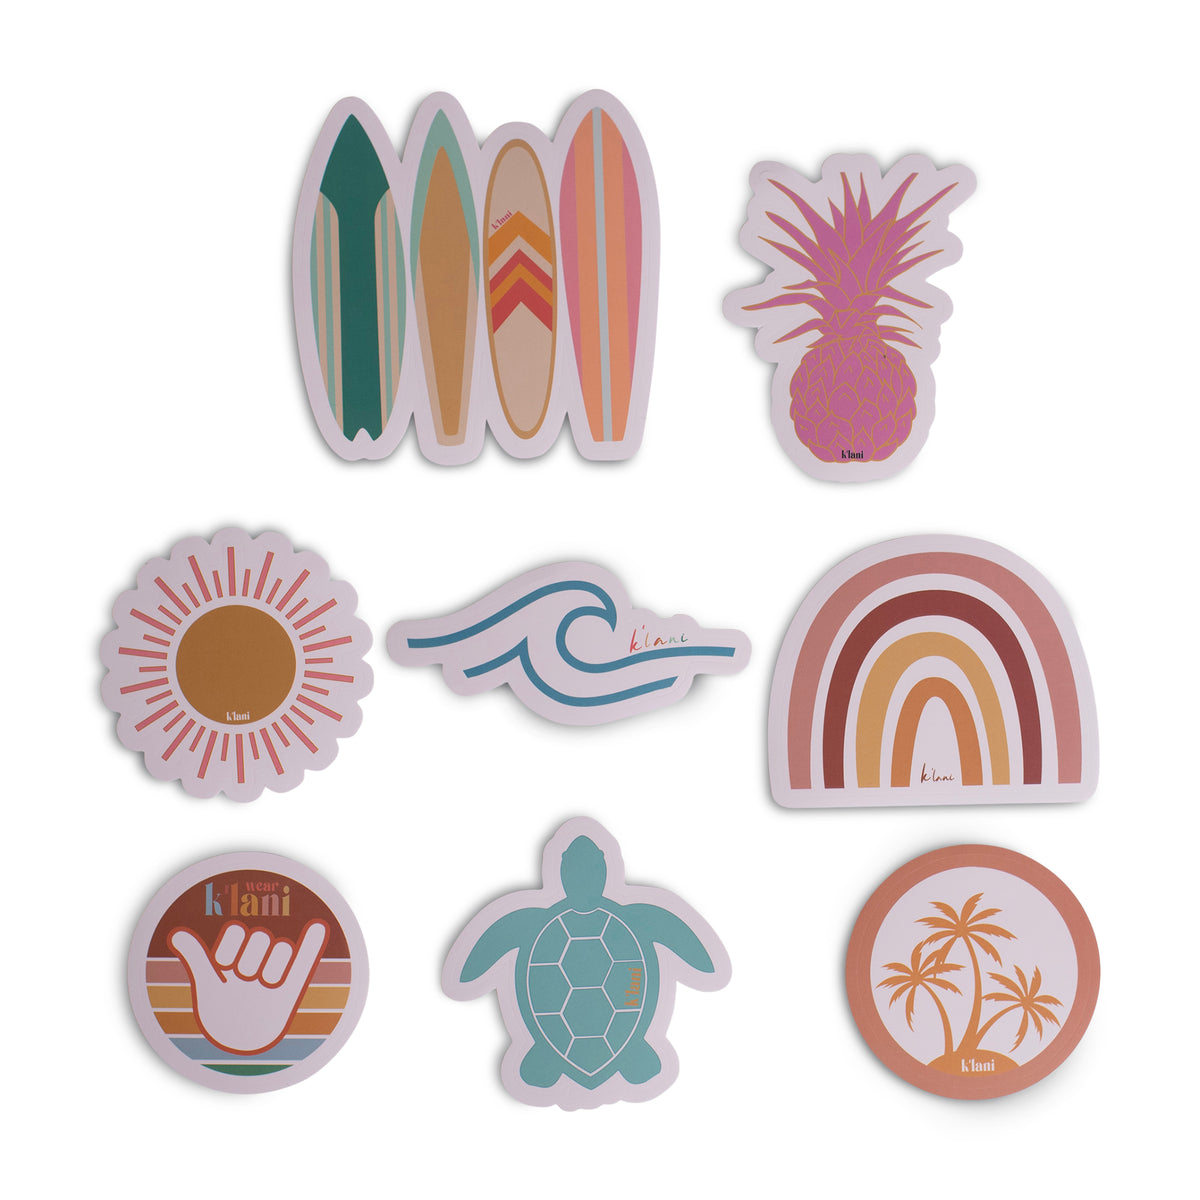 K'lani Stickers - Surf Pack